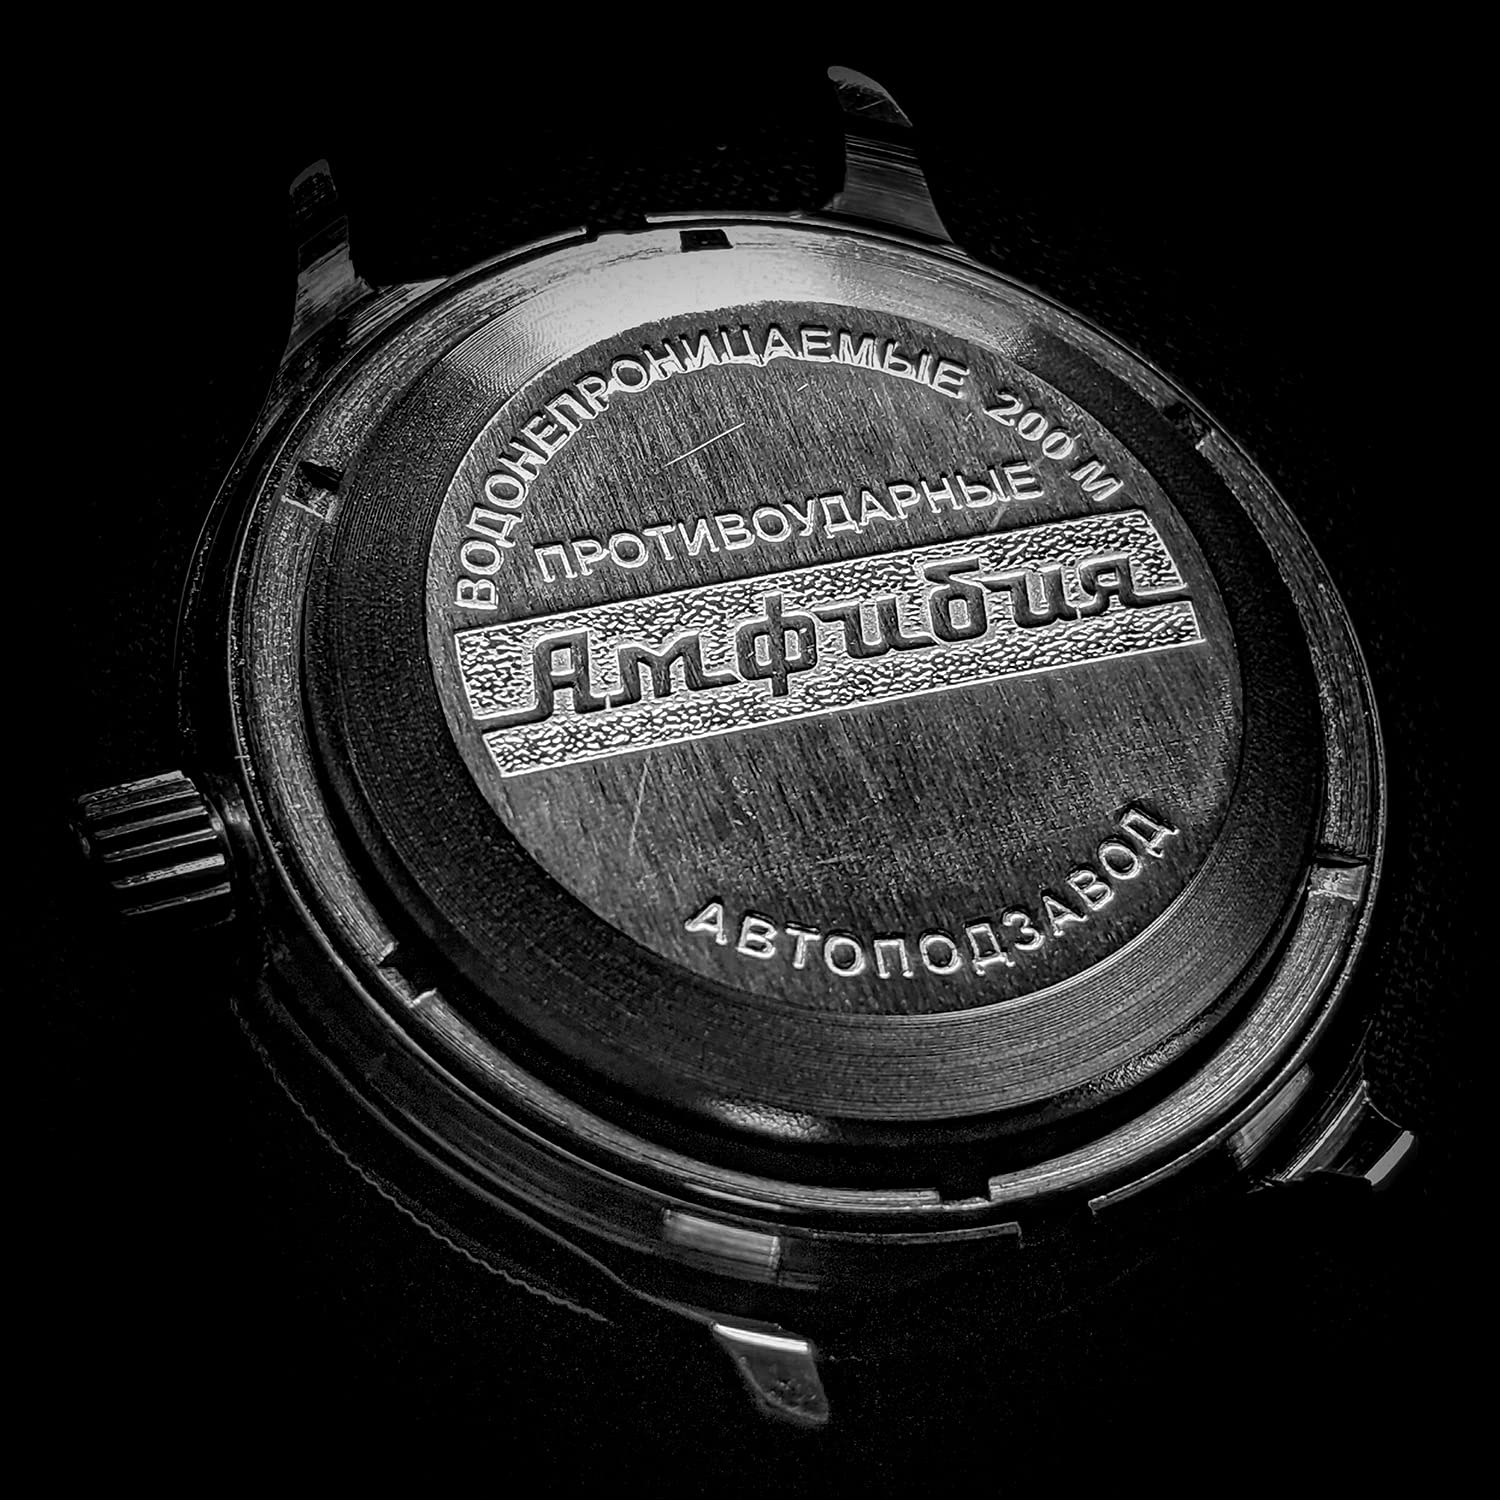 VOSTOK Amphibian Automatic Self-Winding 40mm Diver Wrist Watch | WR 200m | Amphibia 420280 | Black Dial Mechanical Watch | Luminous dots